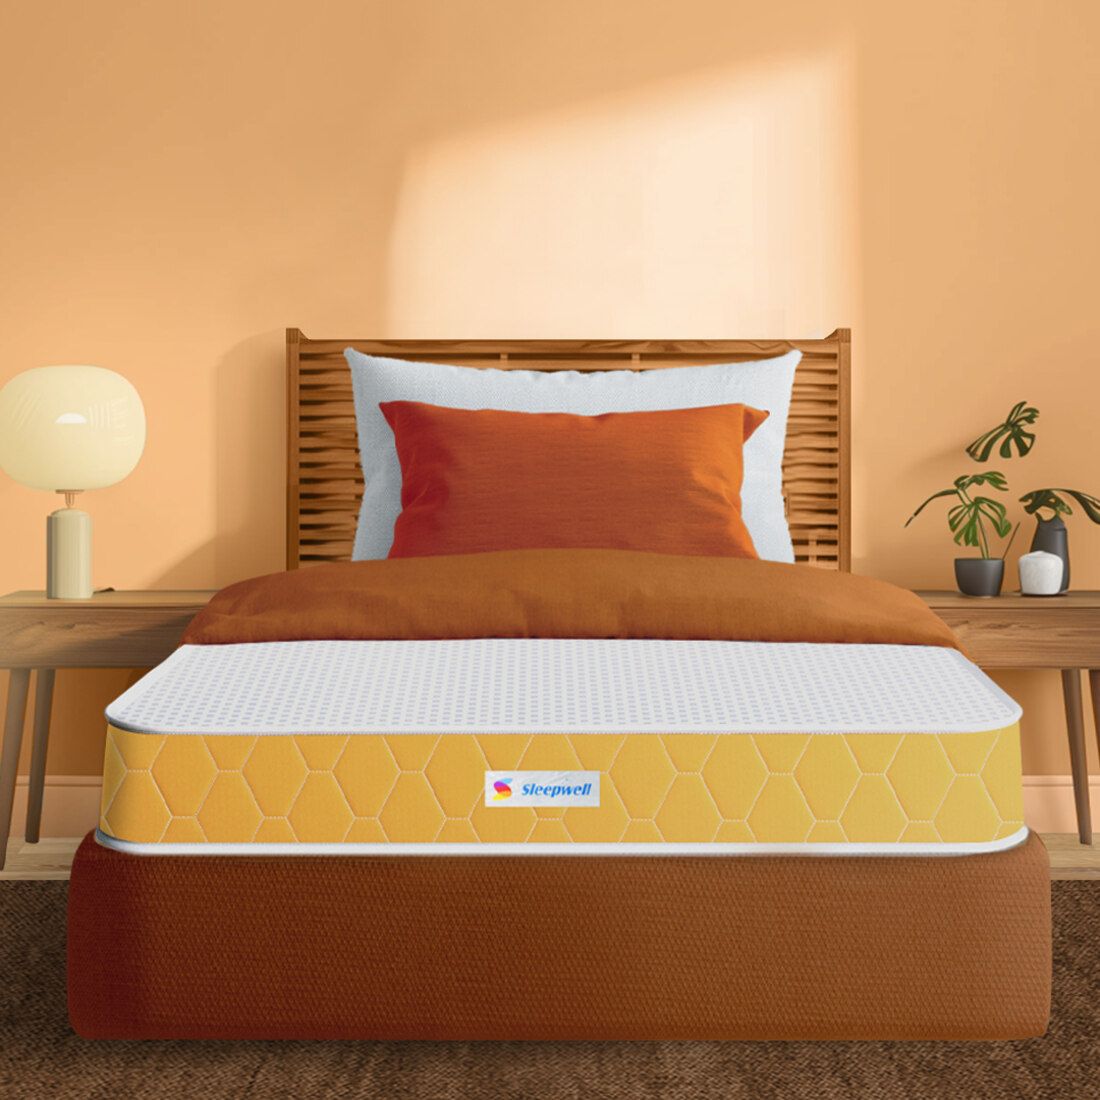 Sleepwell Dual Mattress | Reversible | High Density (HD) Foam | 6-inch Single Bed Size,?Medium Soft & Hard (Orange,78x36X6)